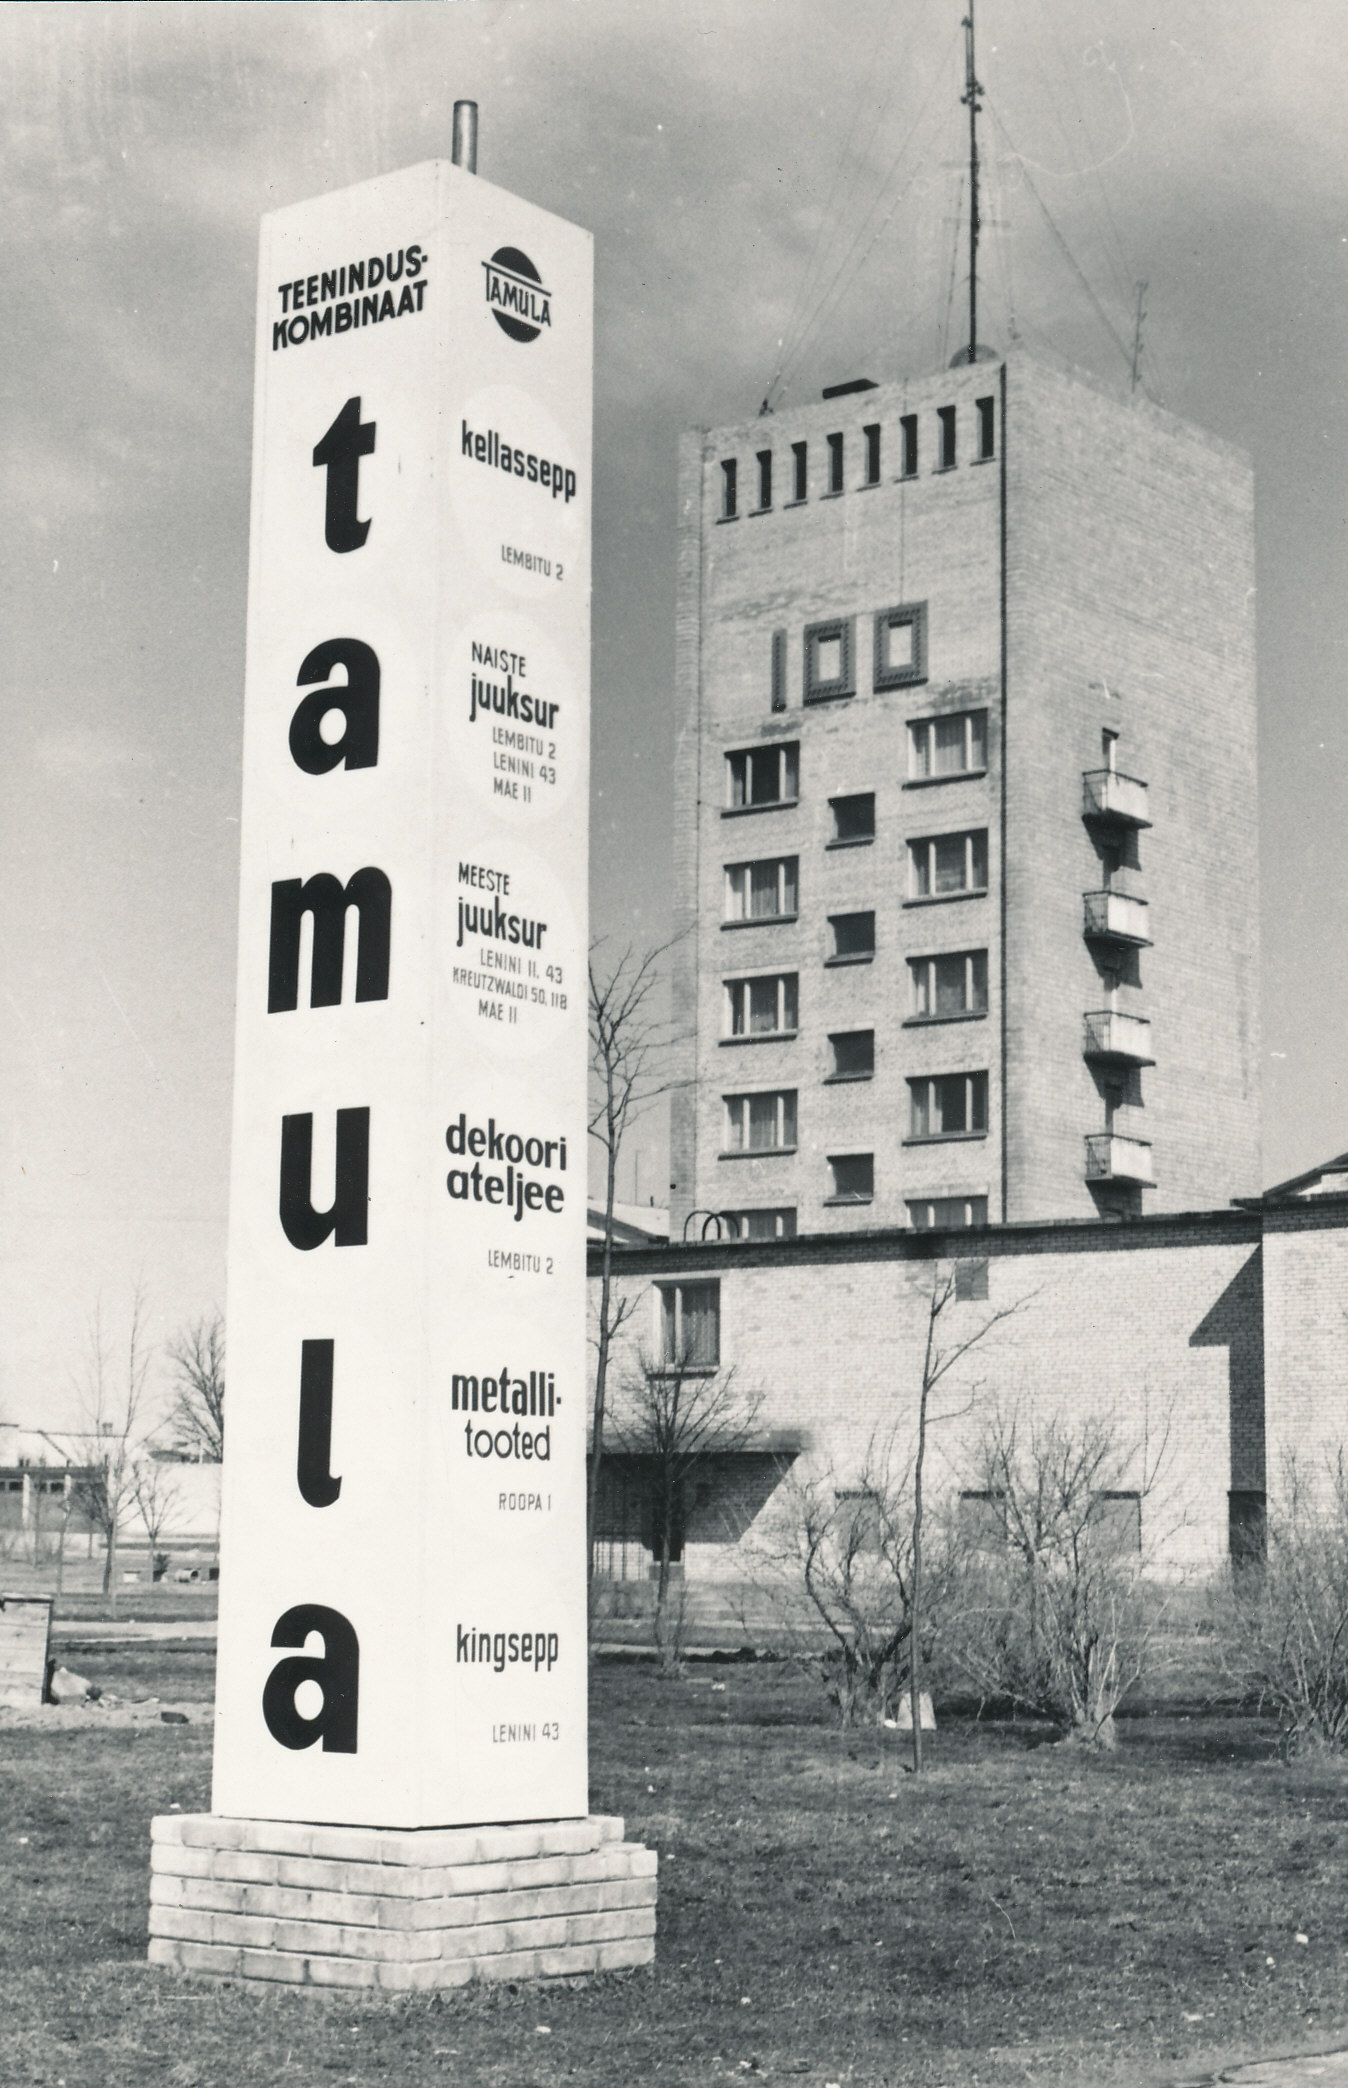 Photo. Service combining "Tamula" advertisement Võrus Winning Square in 1970s.